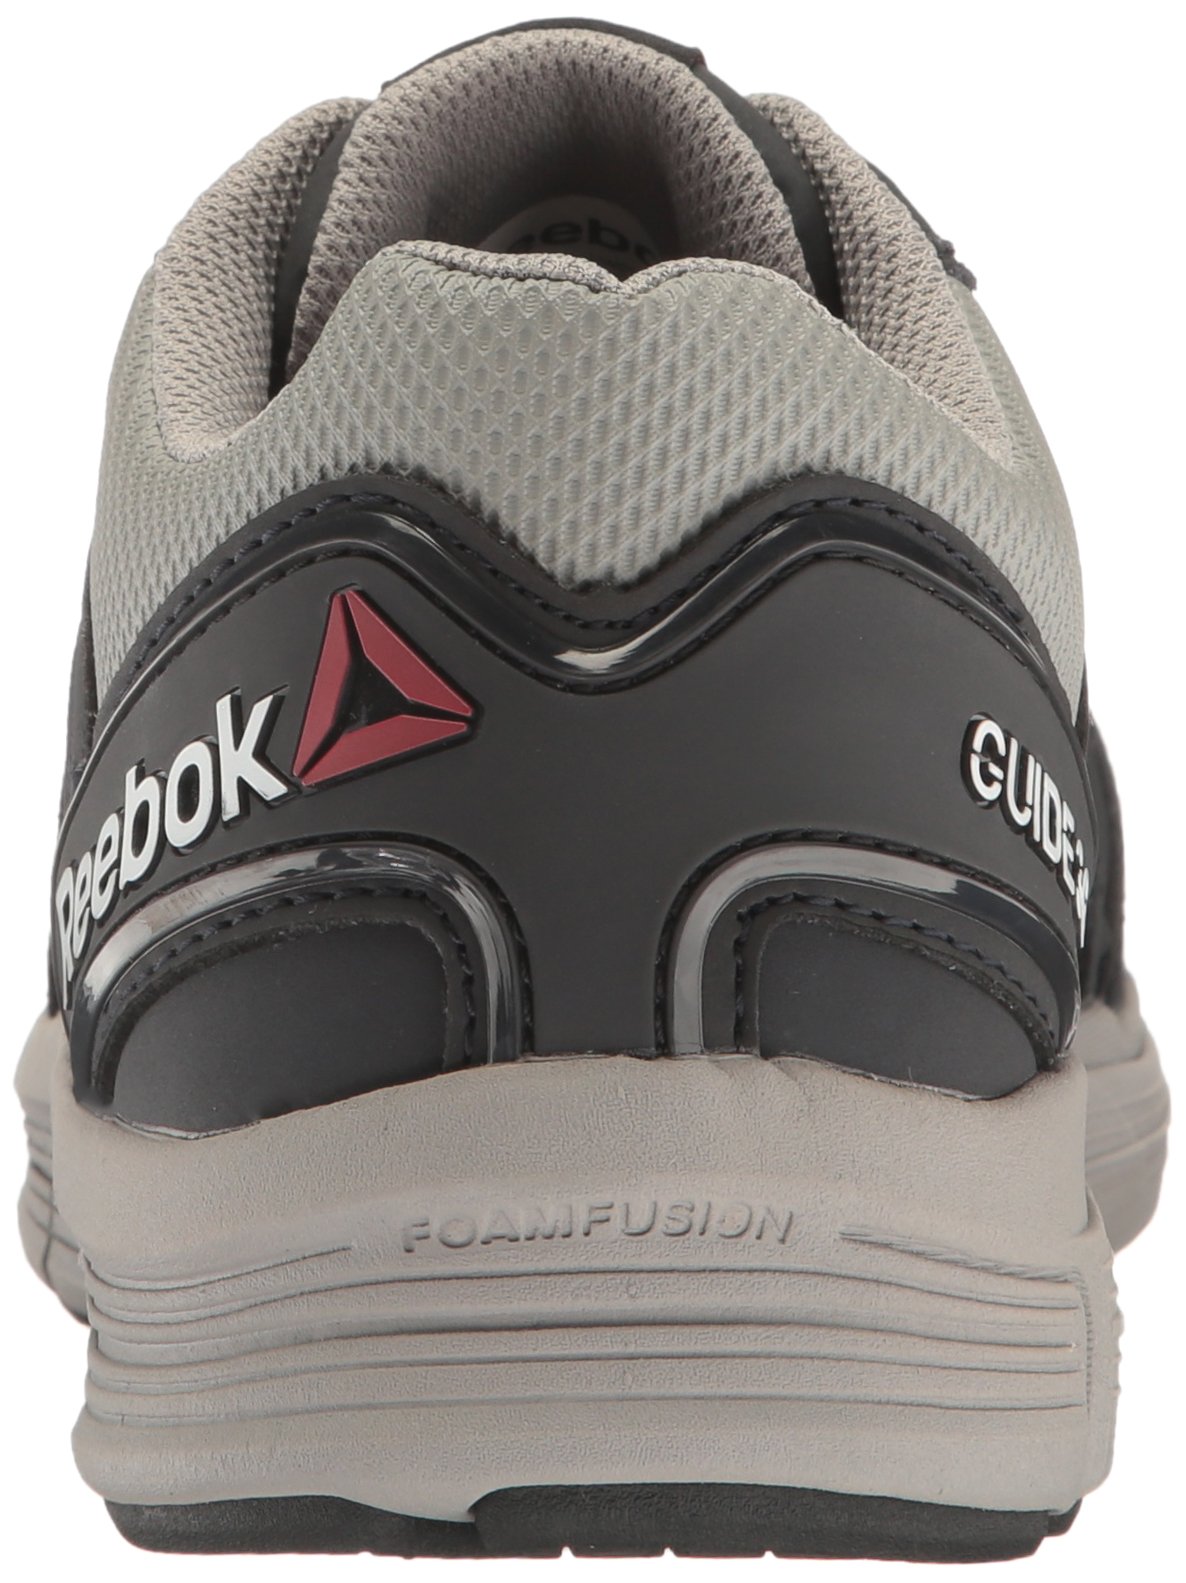 Reebok Work Men's Guide Work RB3502 Industrial & Construction Shoe